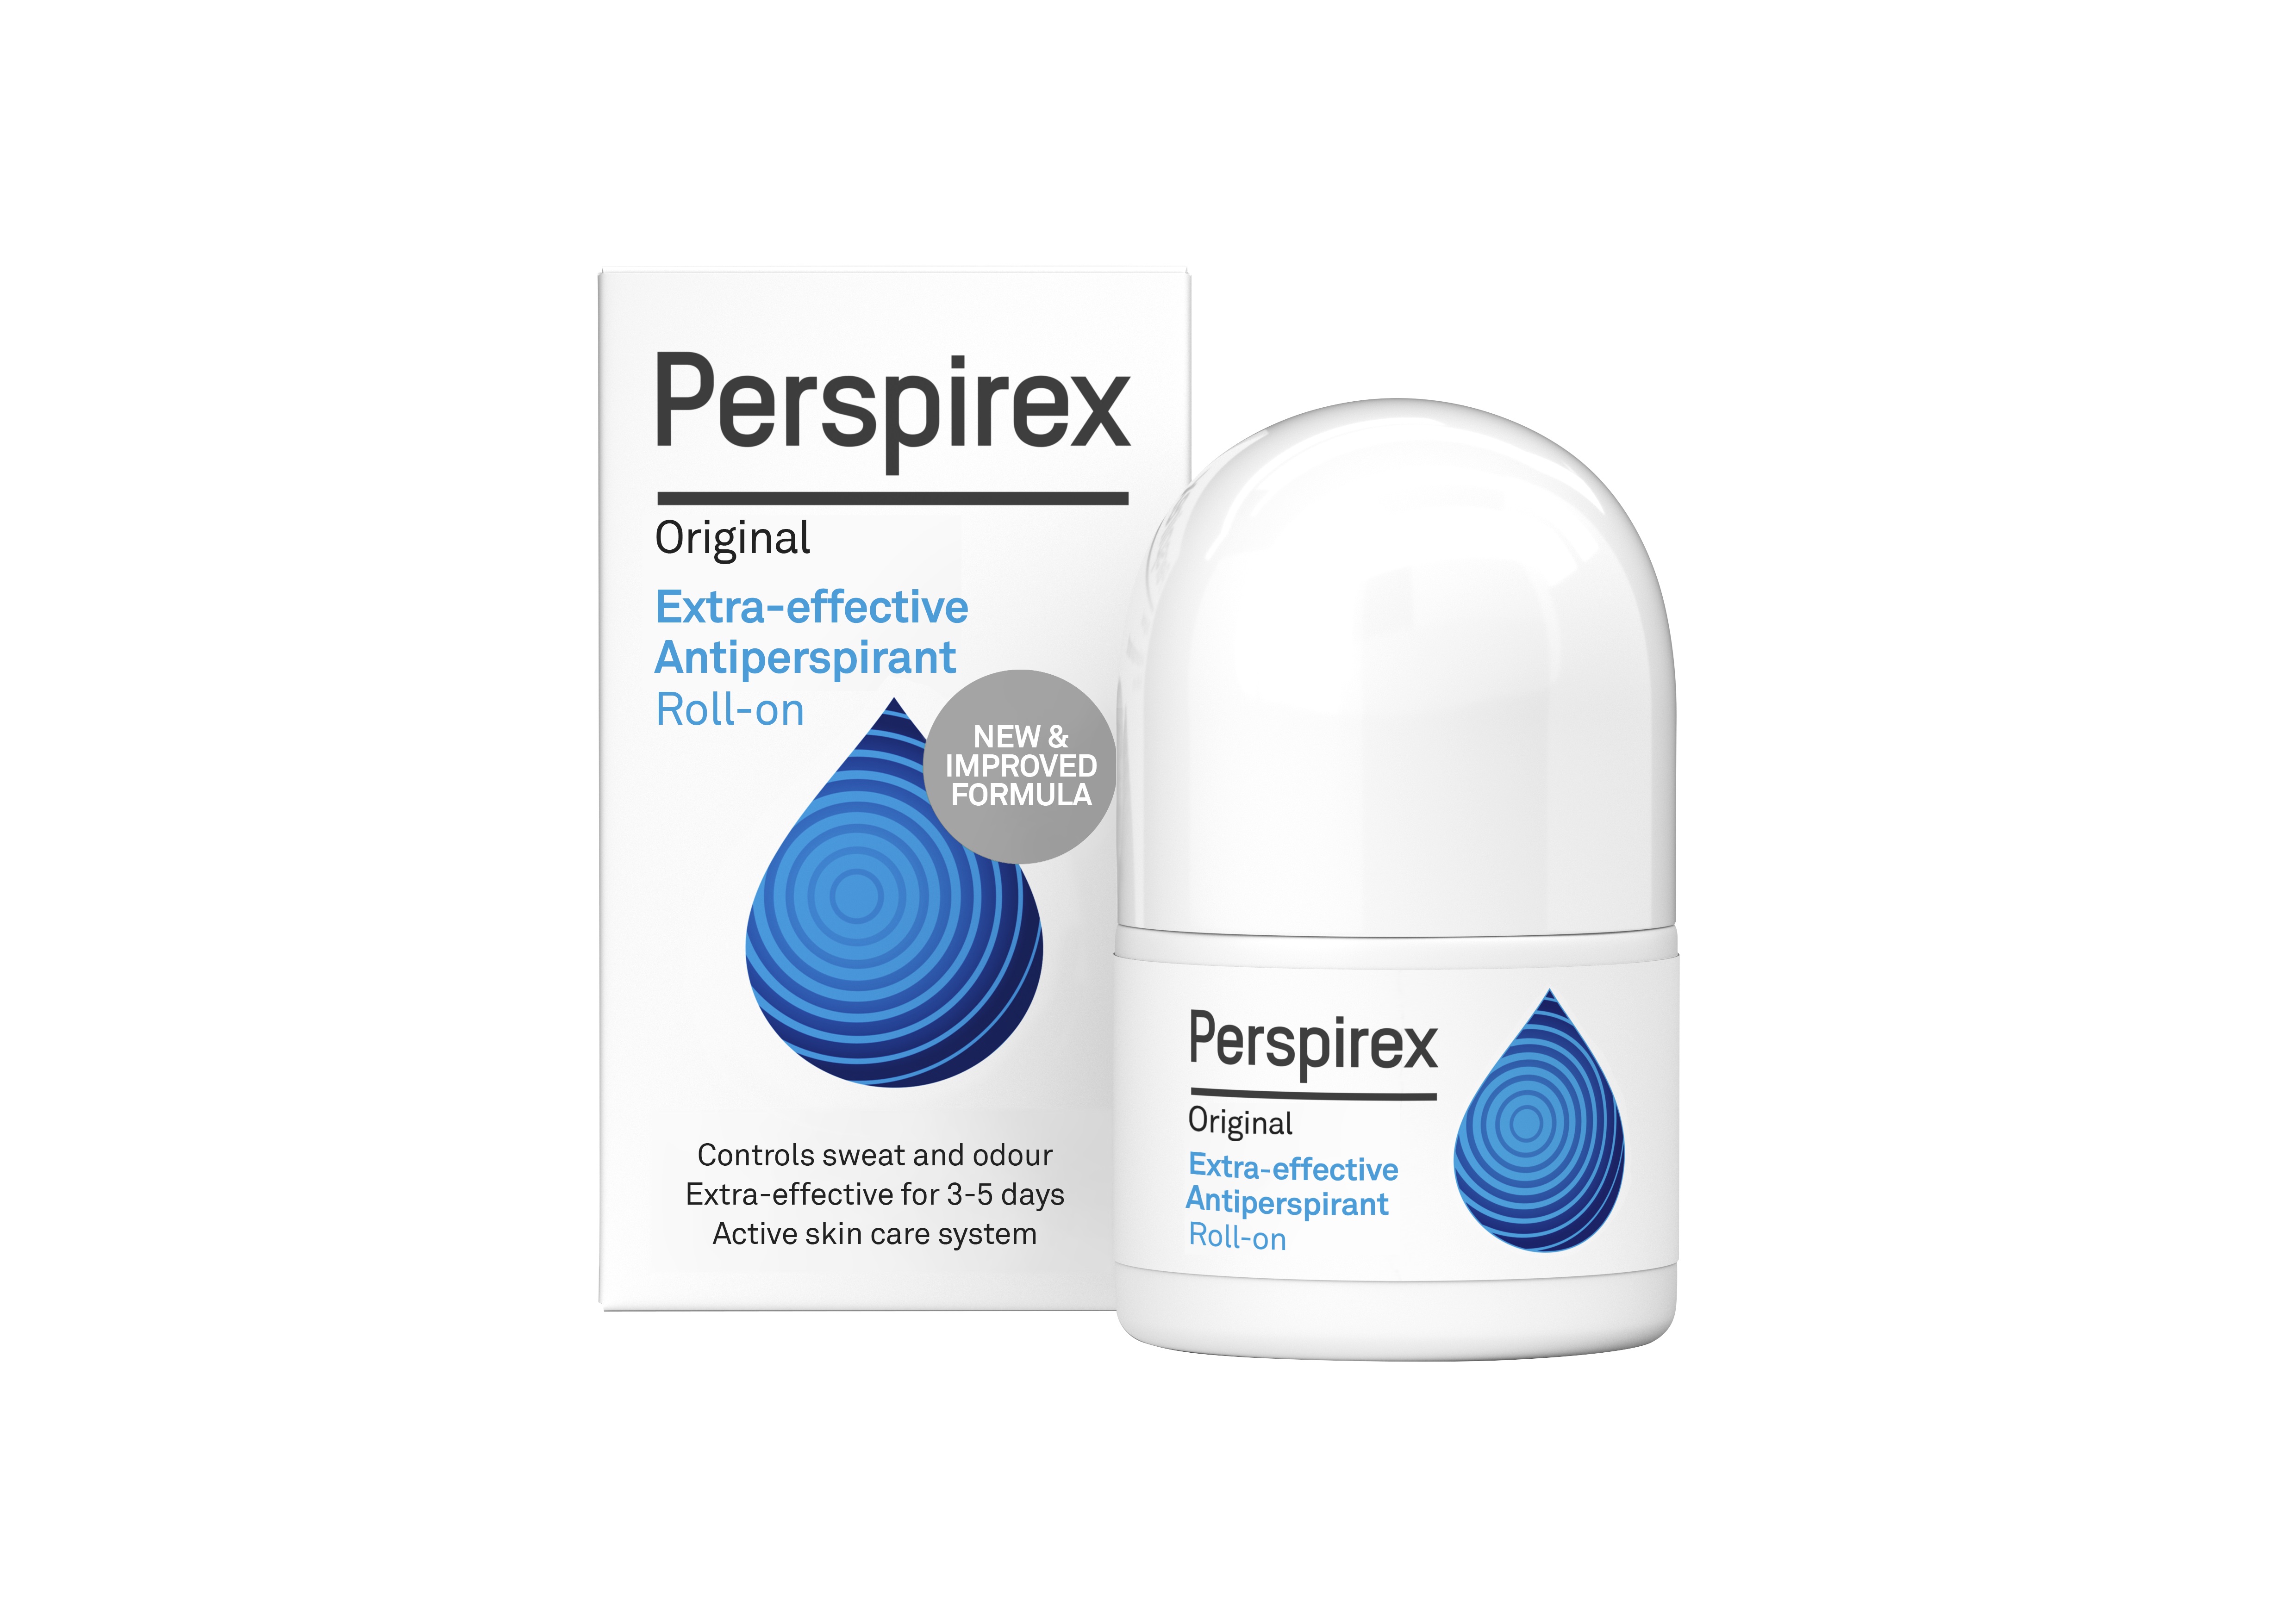 Perspirex Original Antiperspirant, 20 ml